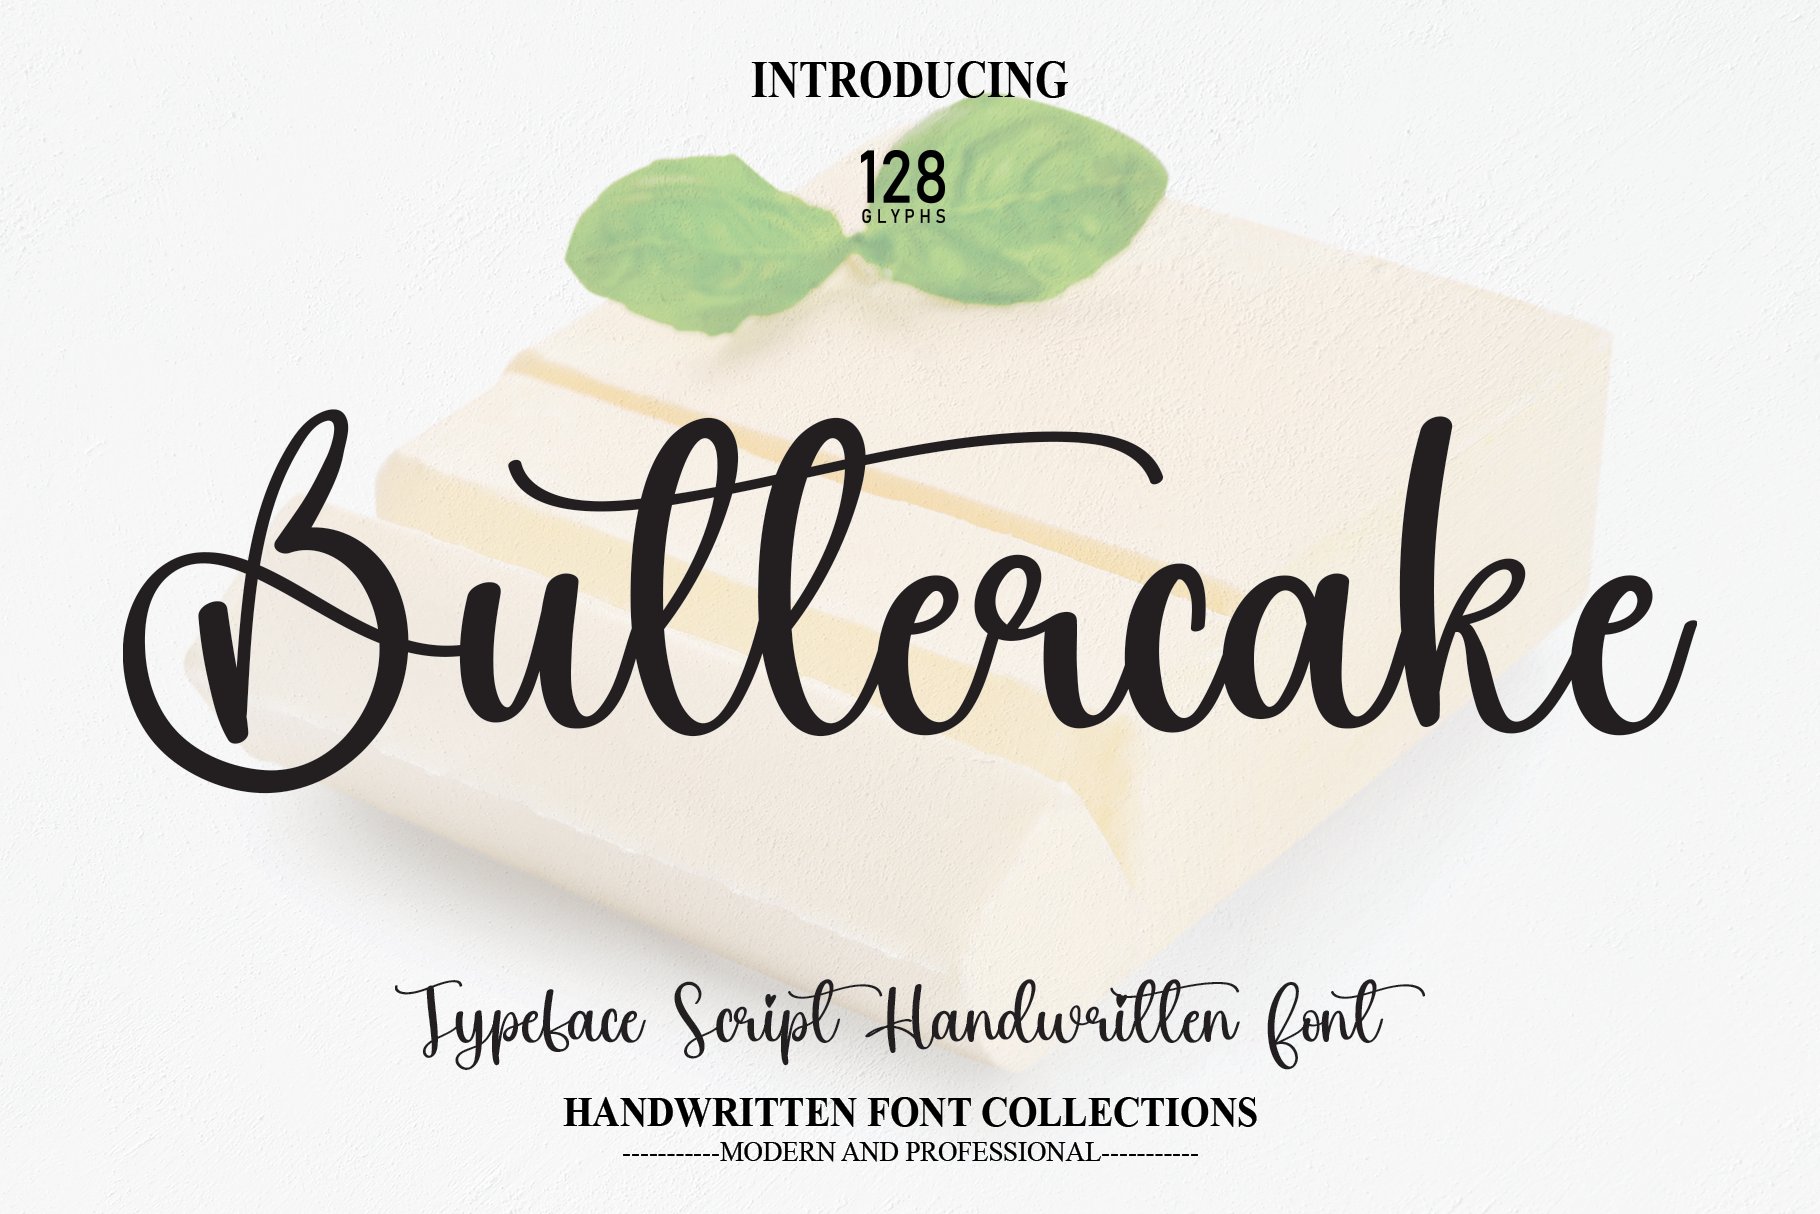 Buttercake | Script Font cover image.